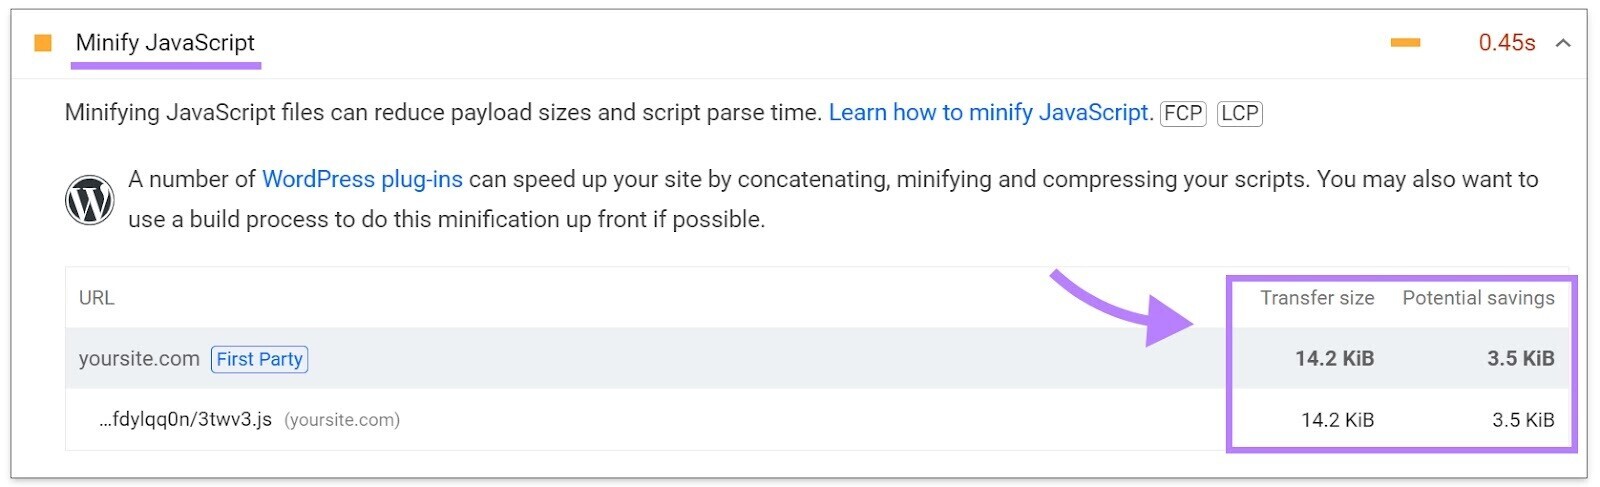 "Minify JavaScript" section